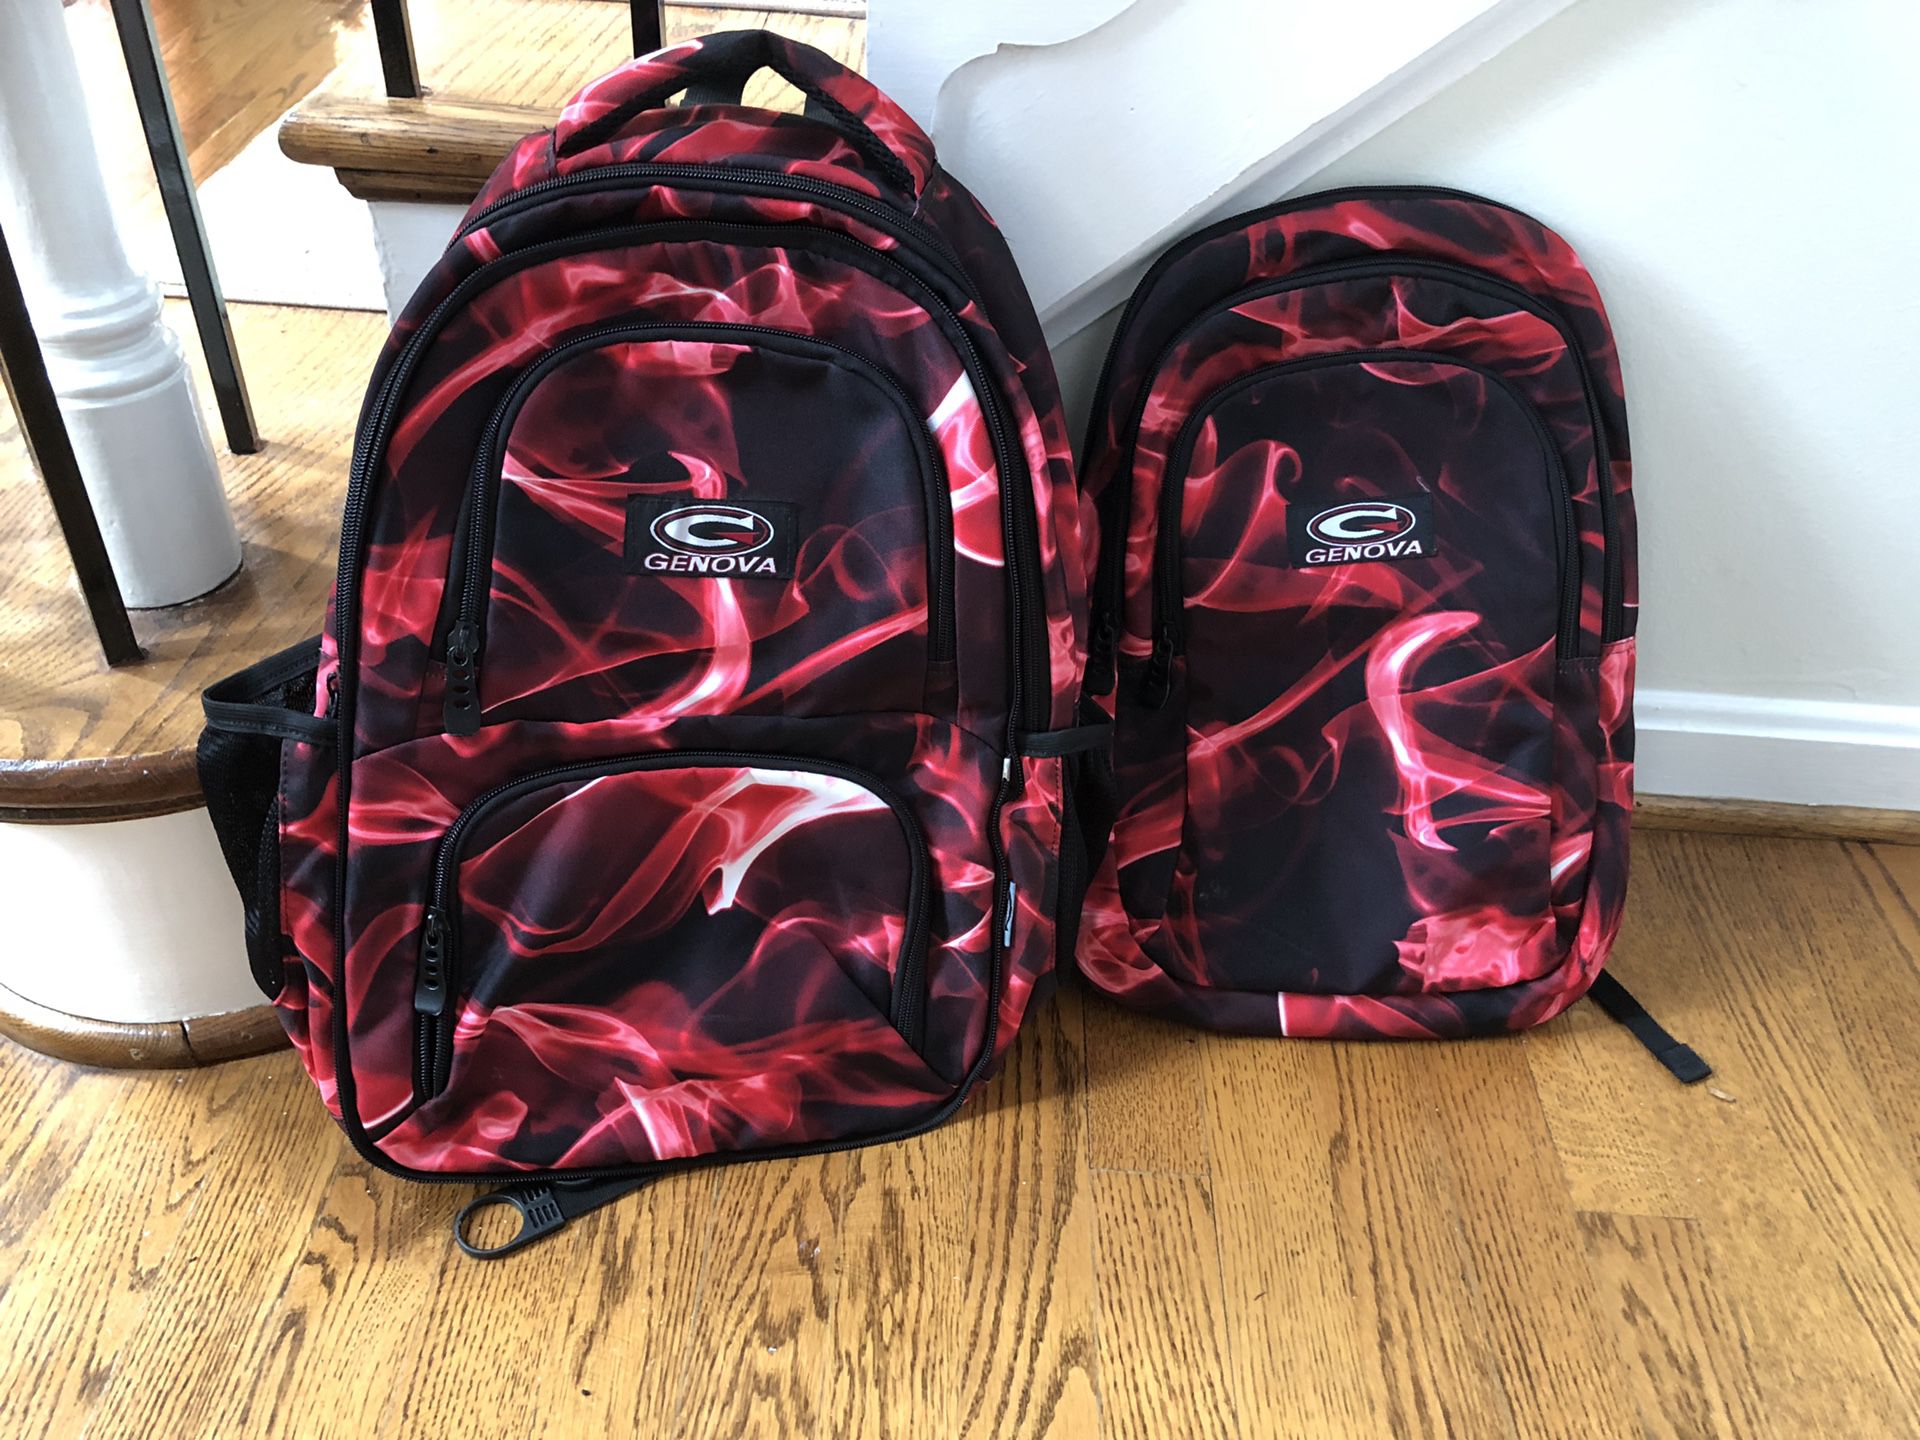 Two in One - Genova backpack